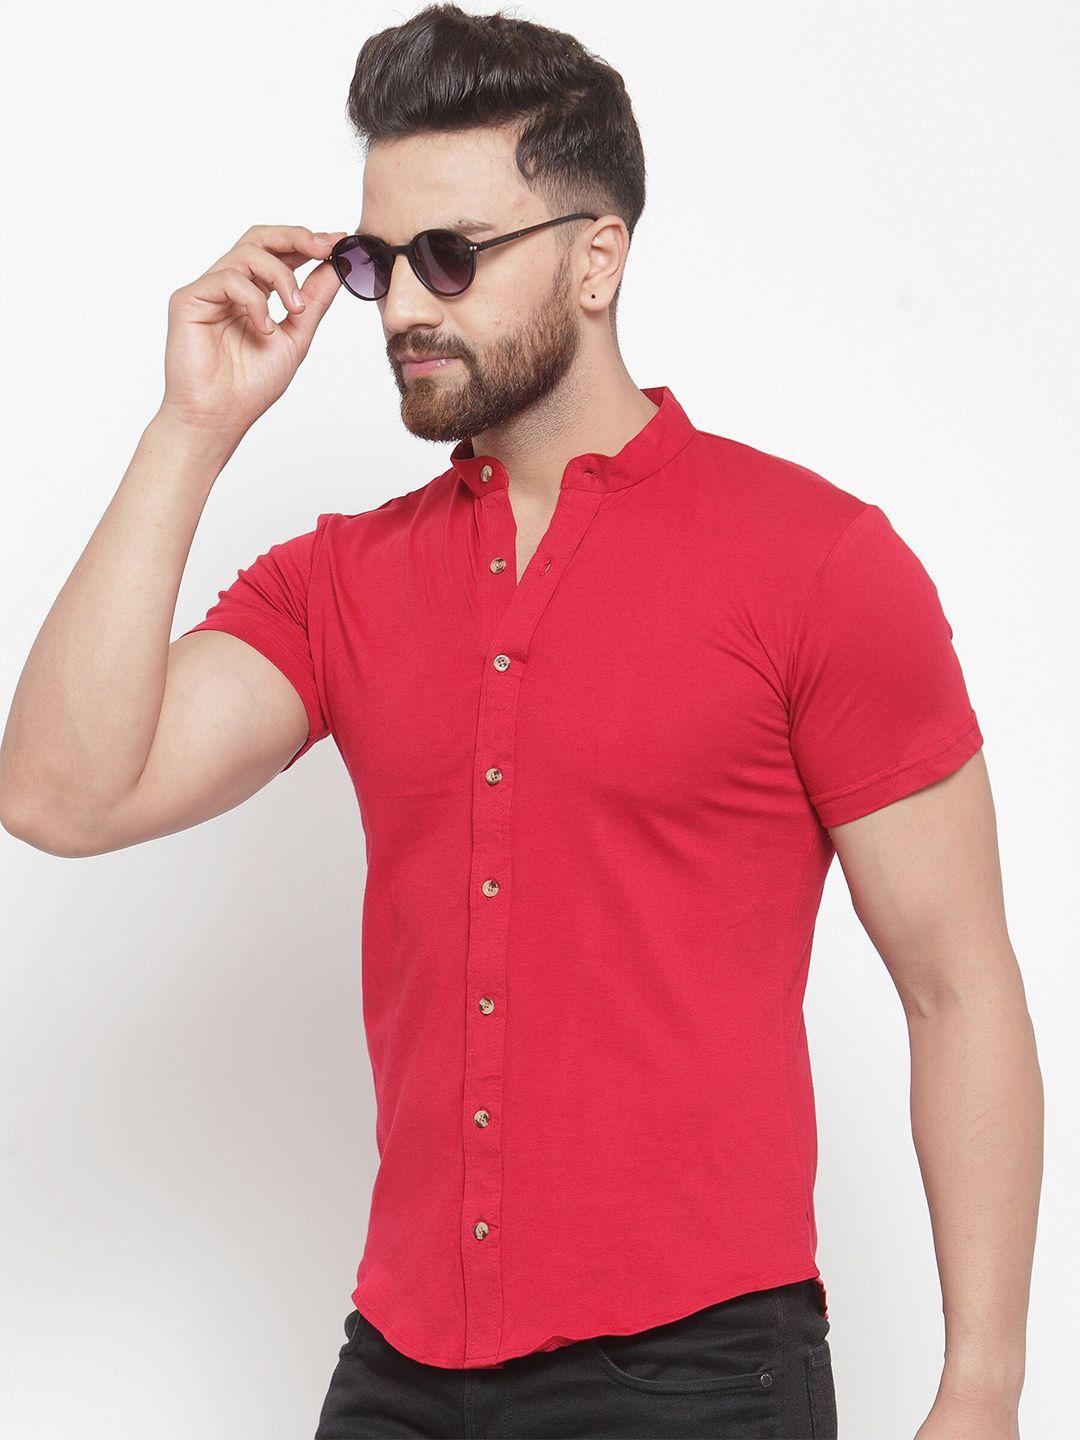 gespo-men-red-casual-cotton-shirt